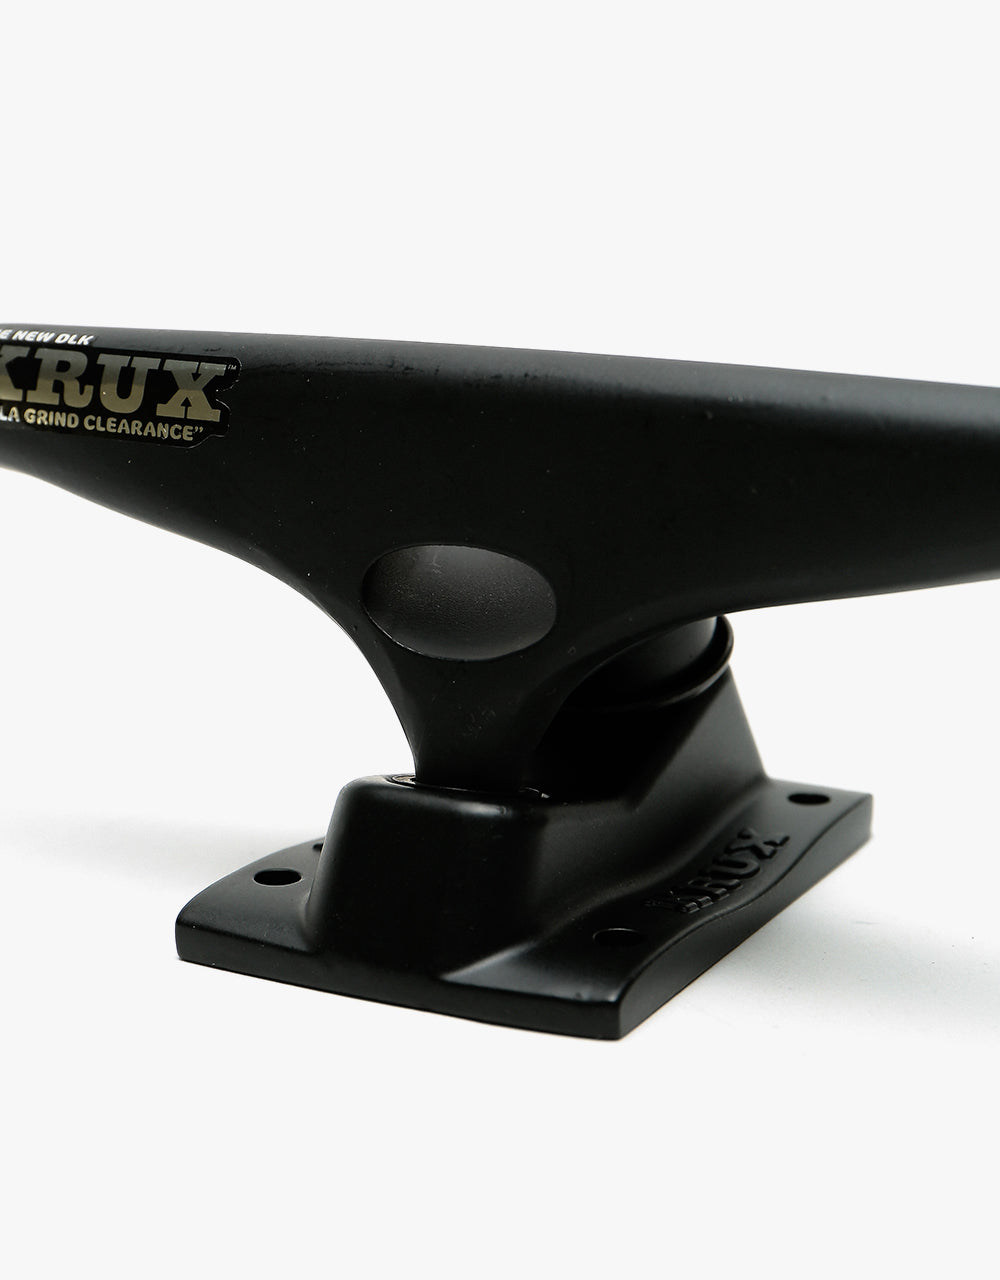 Krux Black Widow K5 DLK 8.0 Standard Skateboard Trucks Pair